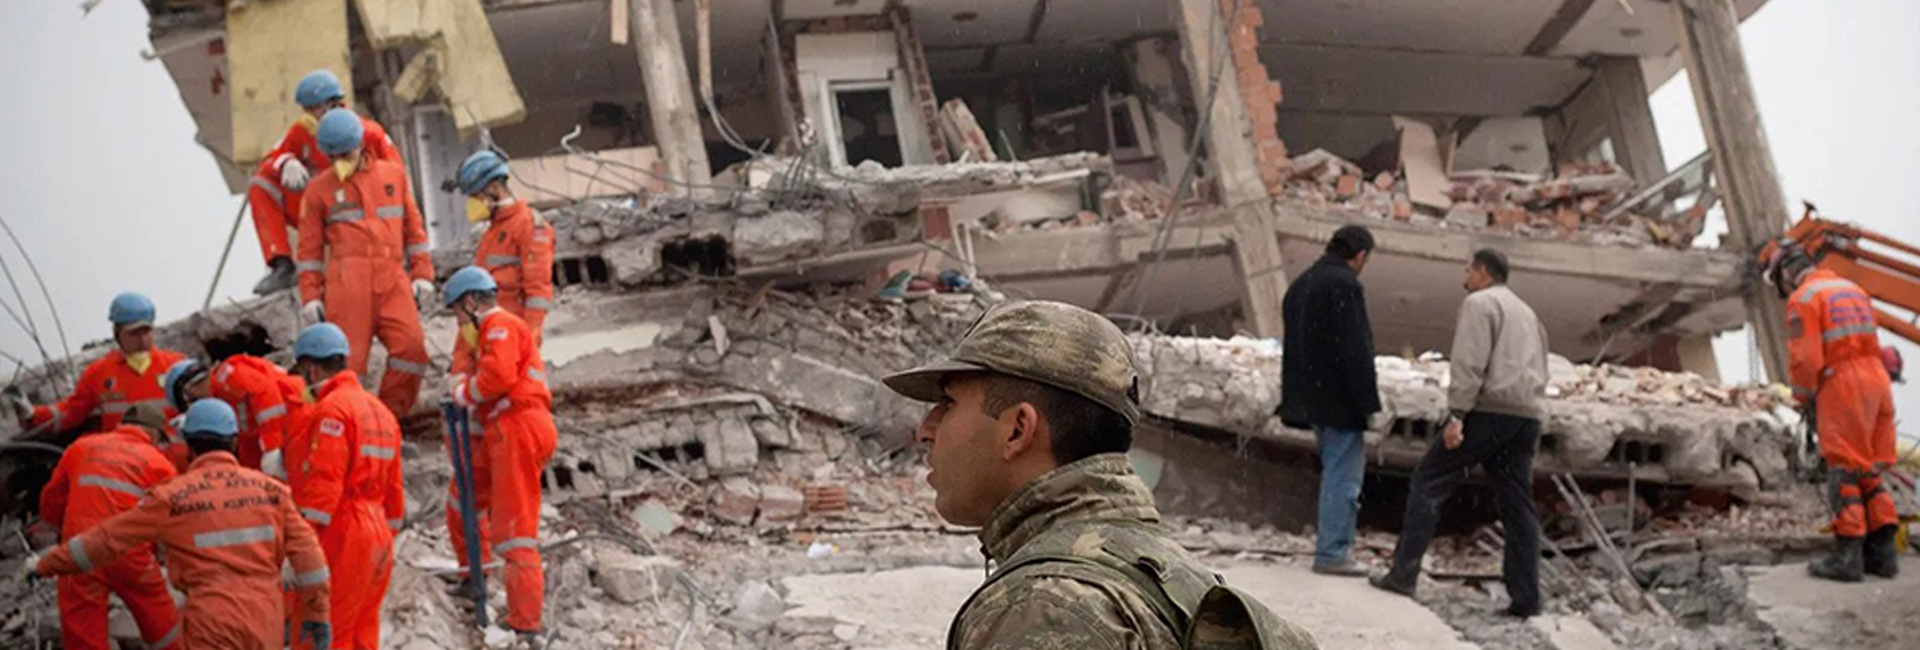 Former ambassador to Turkey writes on the devastating earthquake: I feel a sense of personal pain and anguish